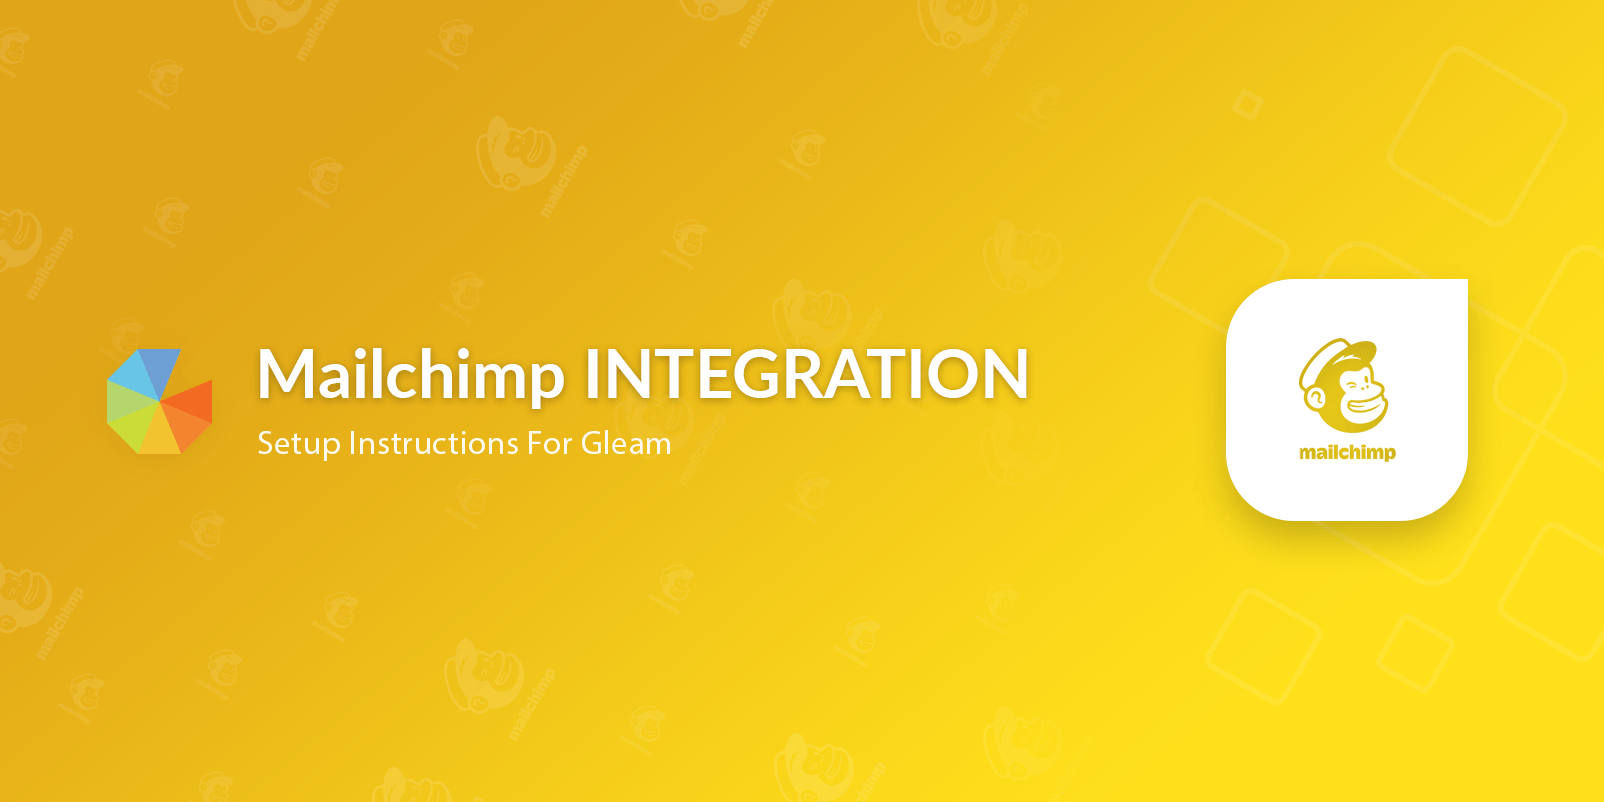 Mailchimp integration setup instructions for Gleam